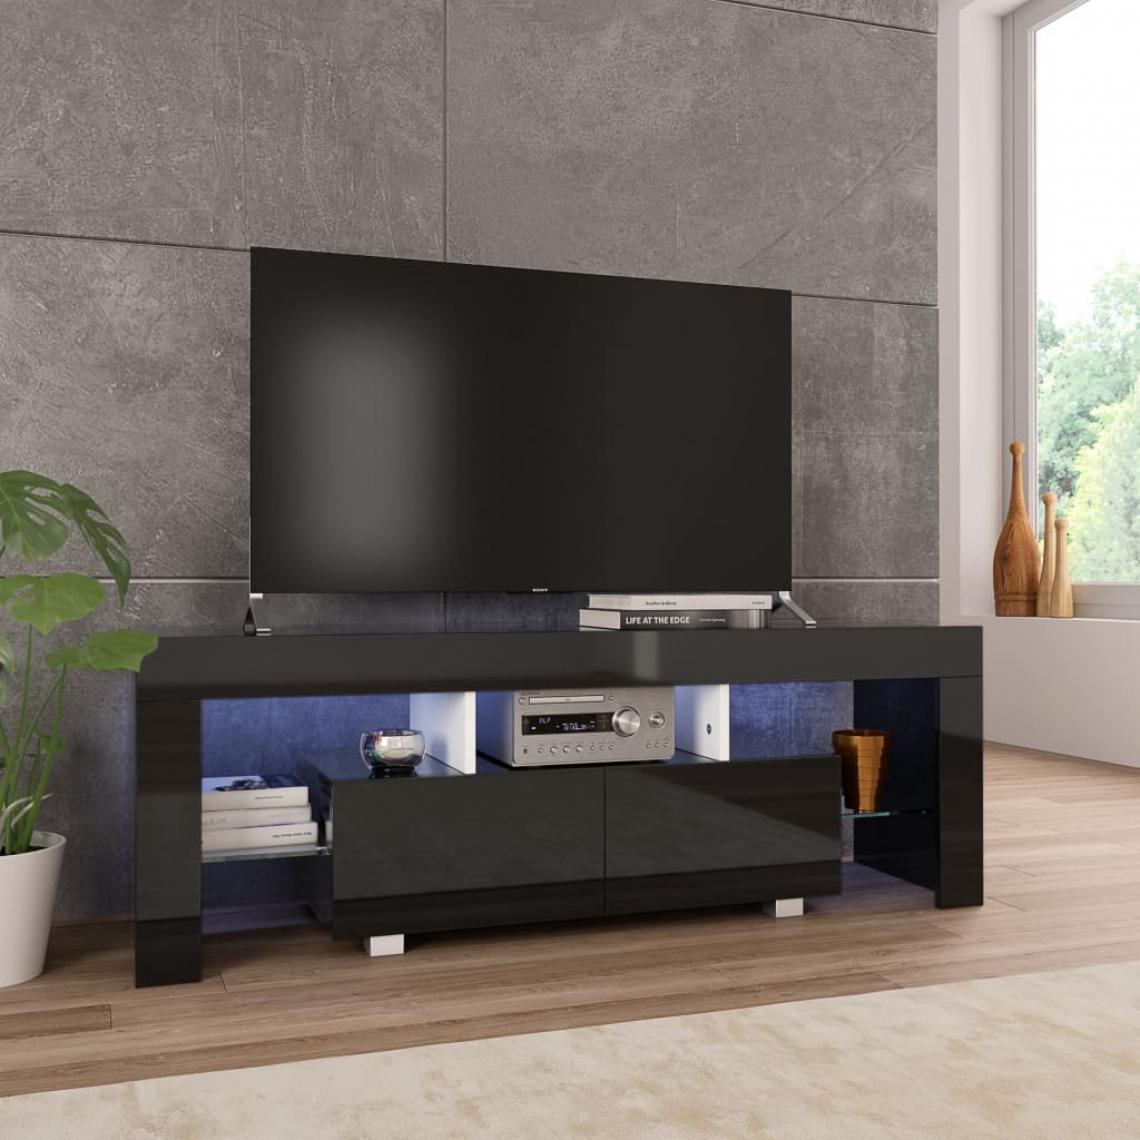 Vidaxl - vidaXL Meuble TV avec lumière LED Noir brillant 130 x 35 x 45 cm - Meubles TV, Hi-Fi